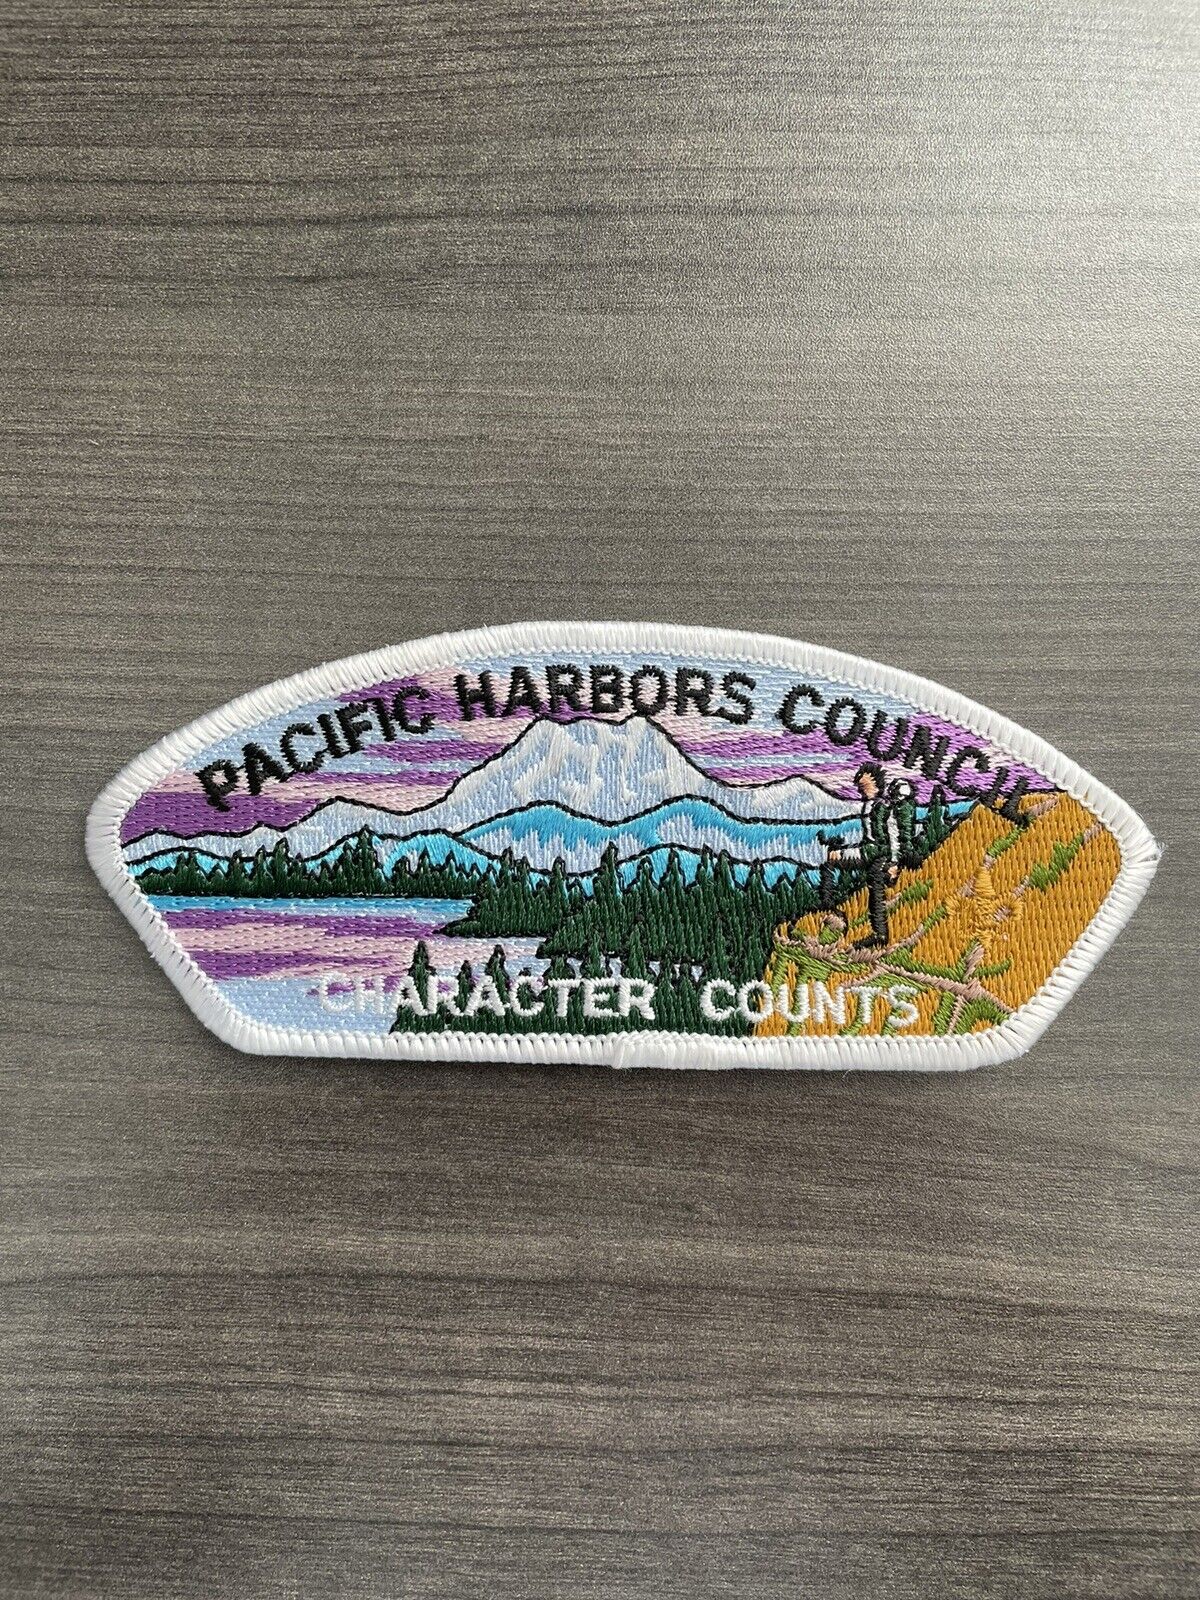 Pacific Harbors Council Patch New RARE Hiker Version BSA Boy Scouts CSP